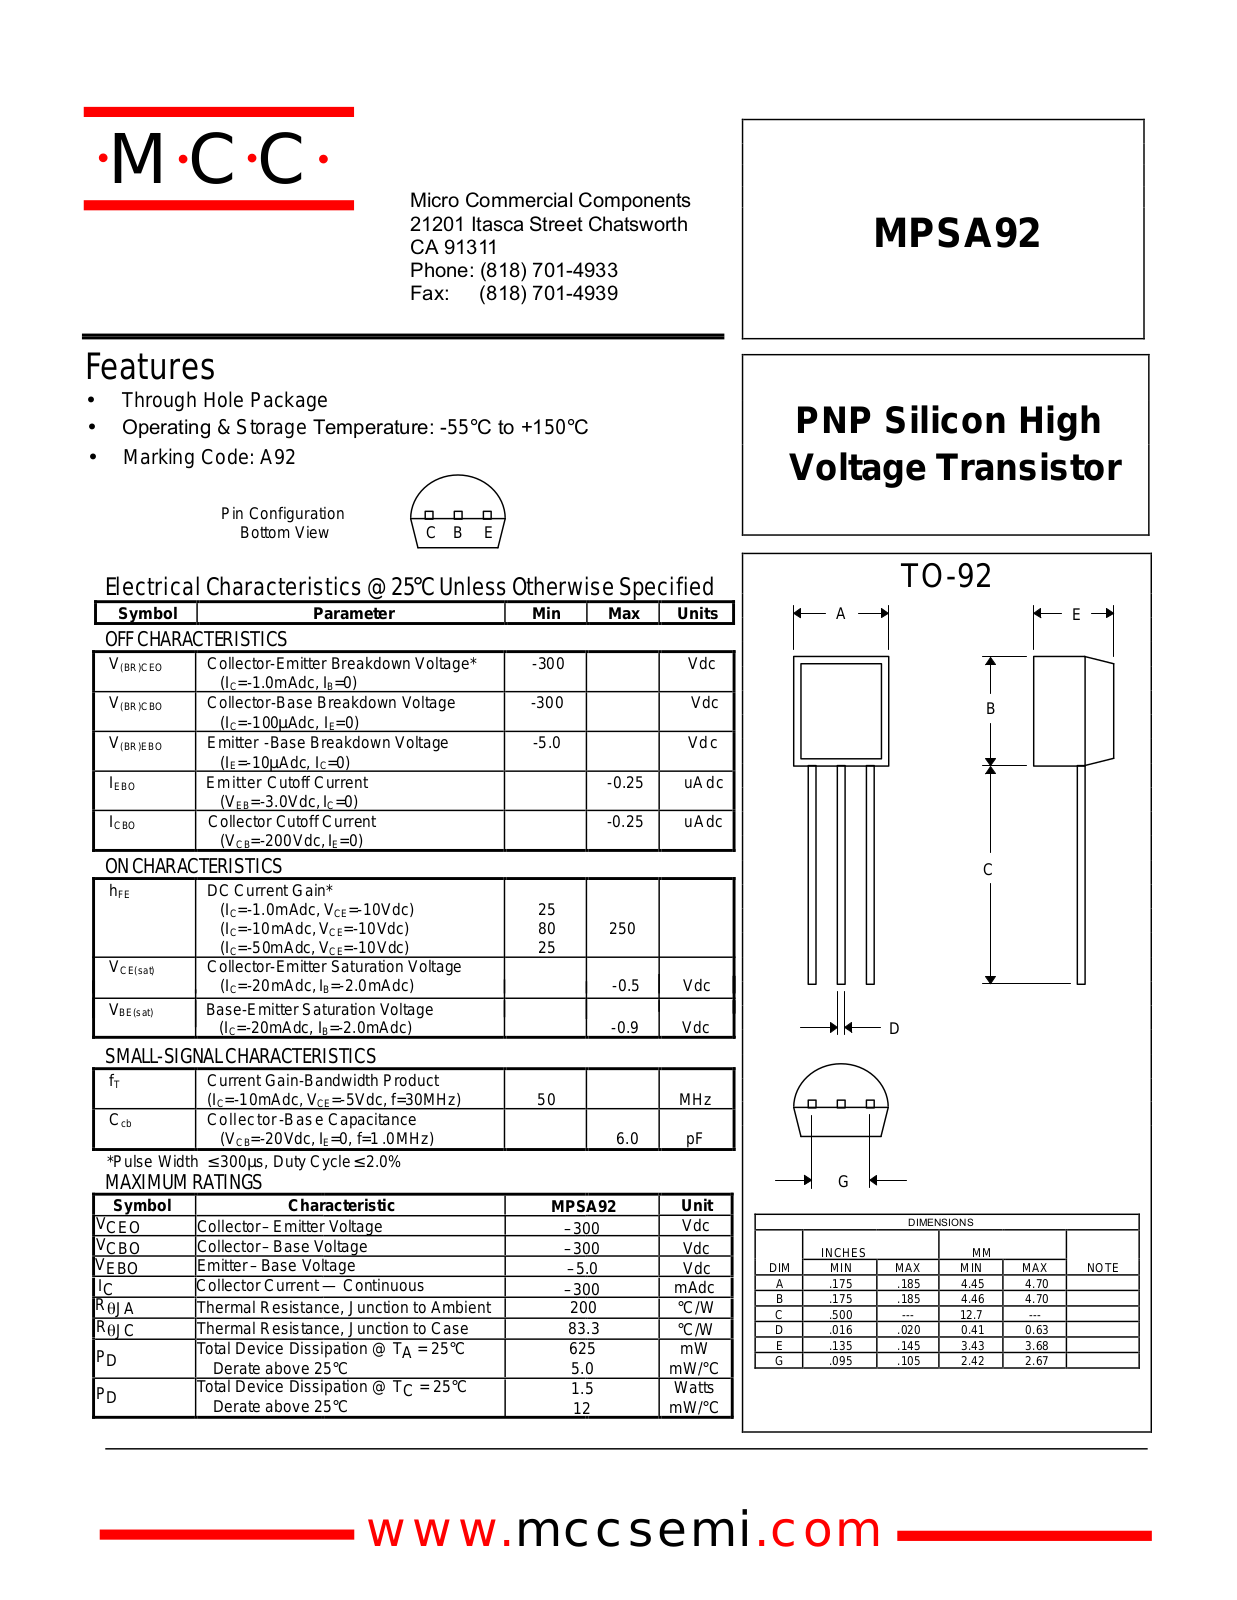 MCC MPSA92 Datasheet